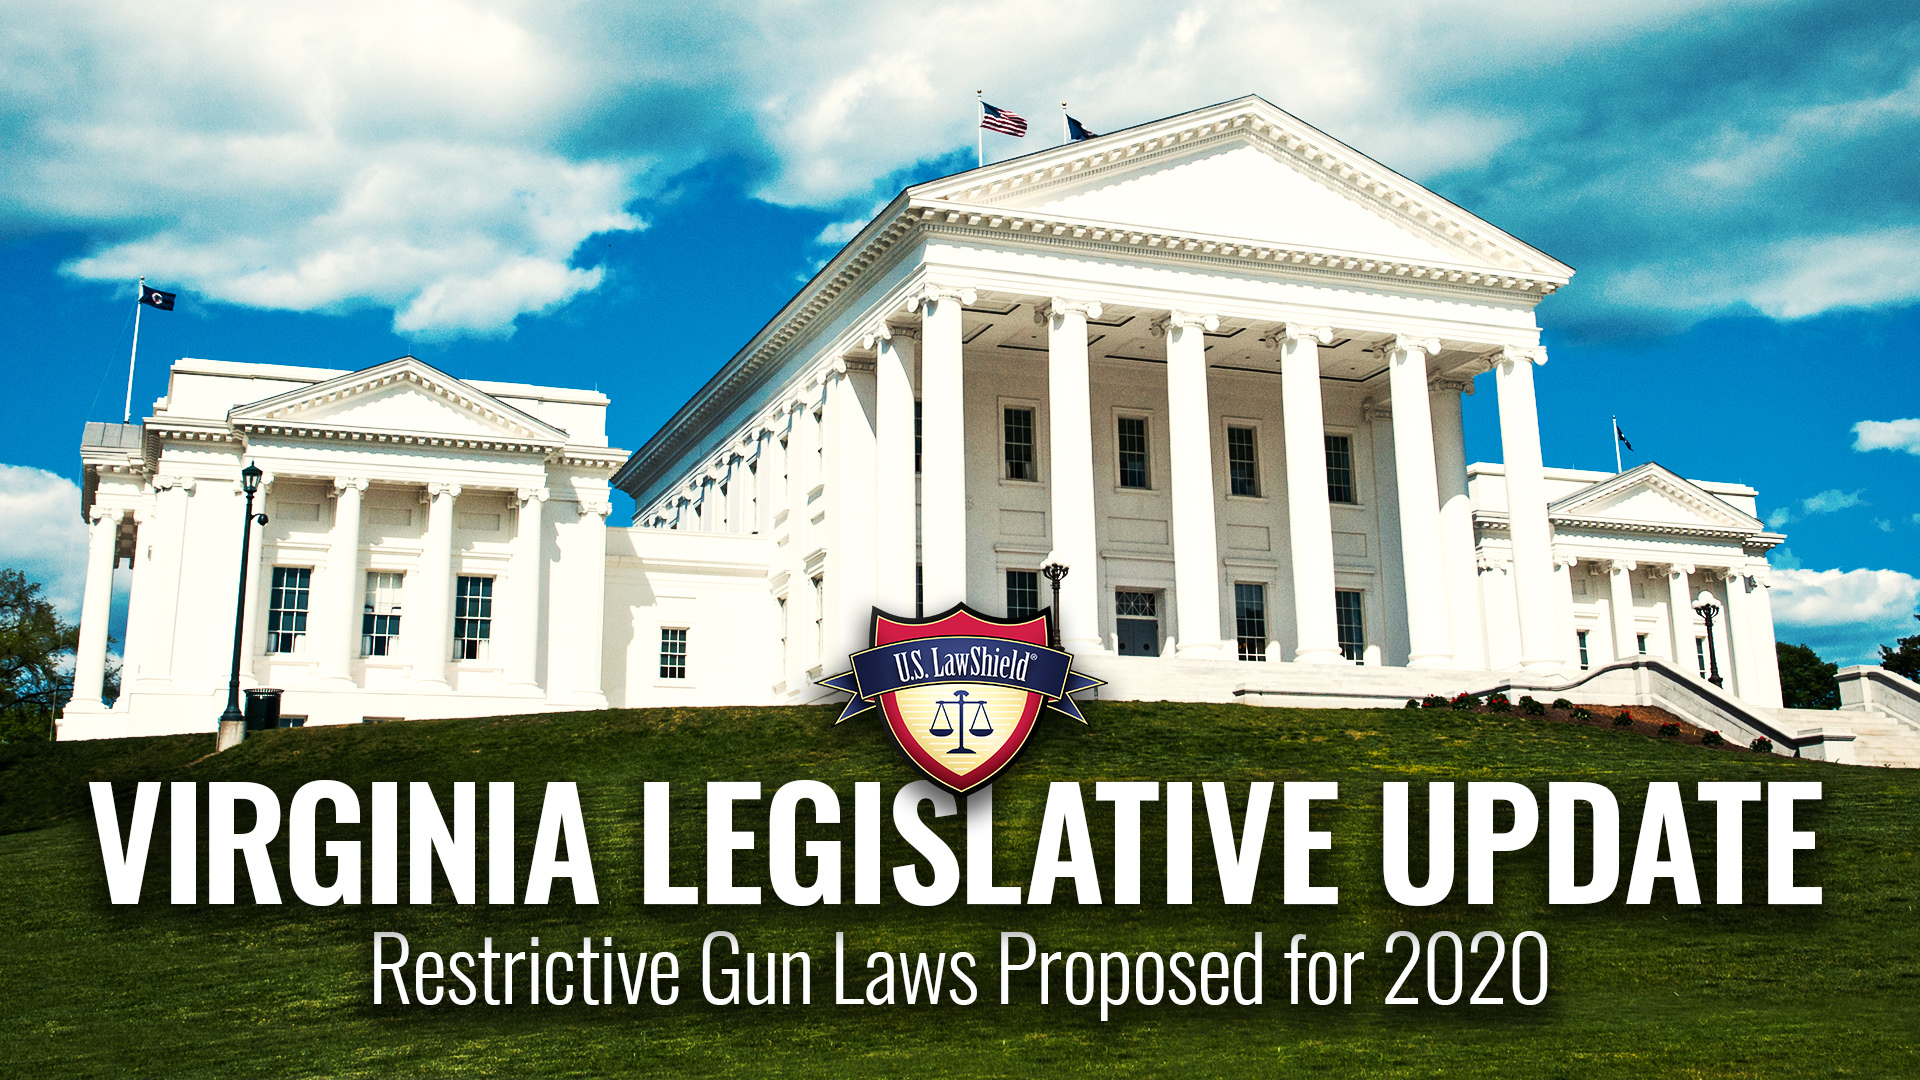 Virginia Legislative Update Restrictive Gun Laws Proposed for 2020